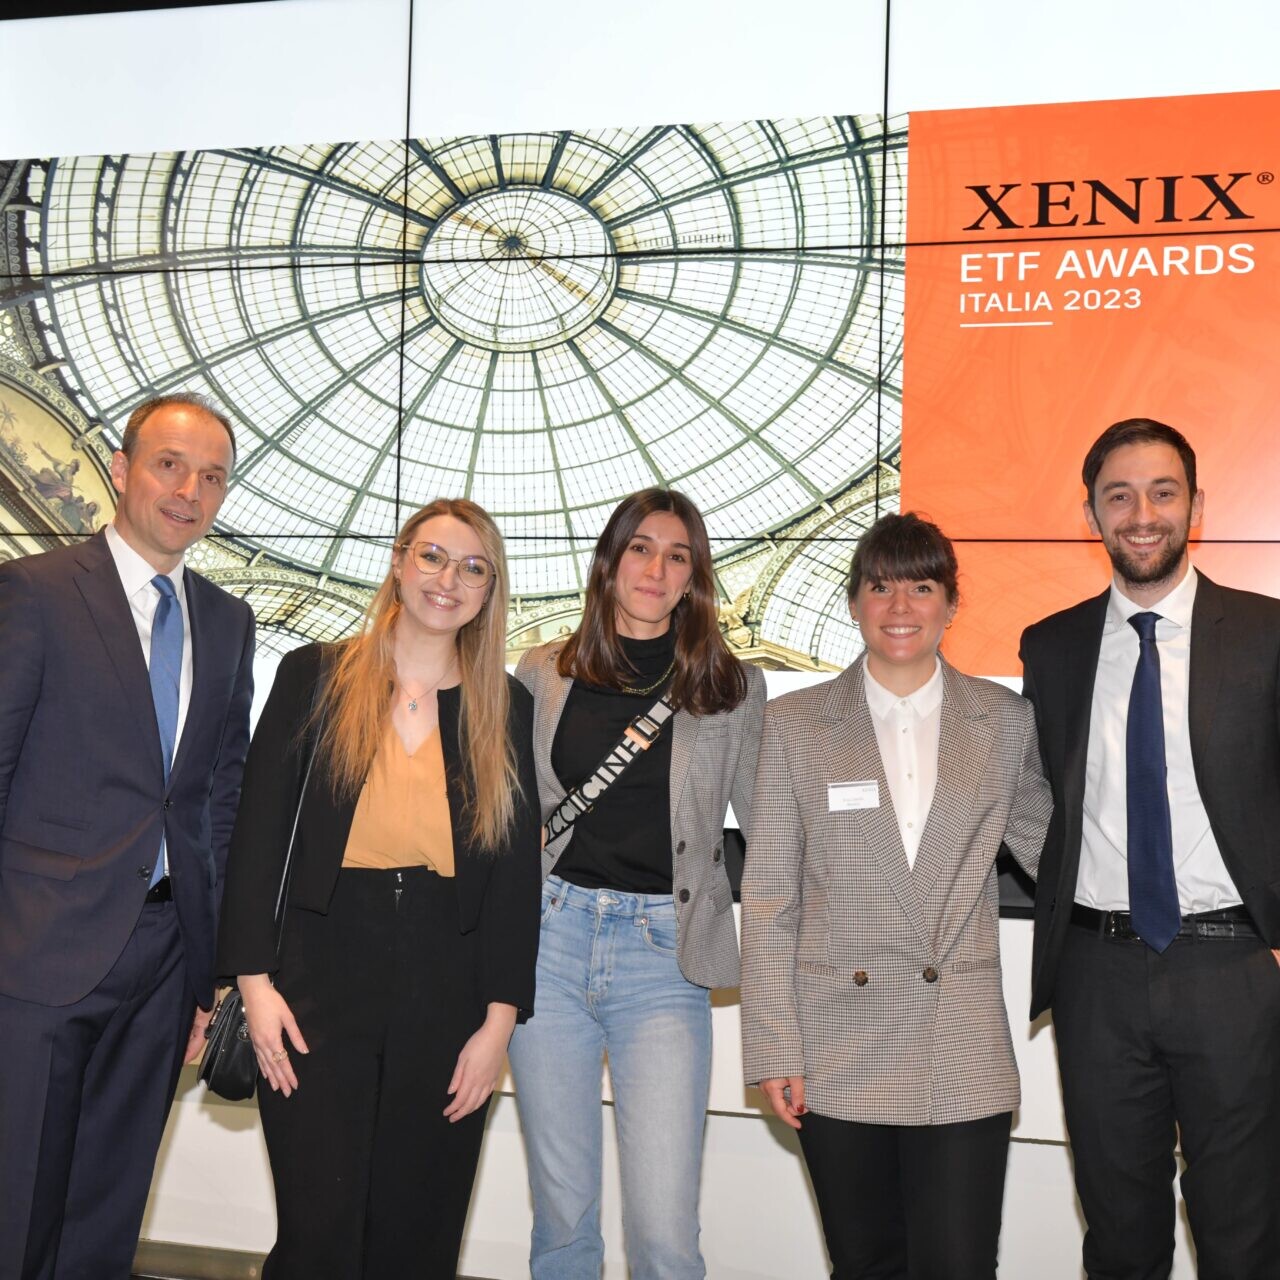 XENIX ETF AWARDS Italia 2023